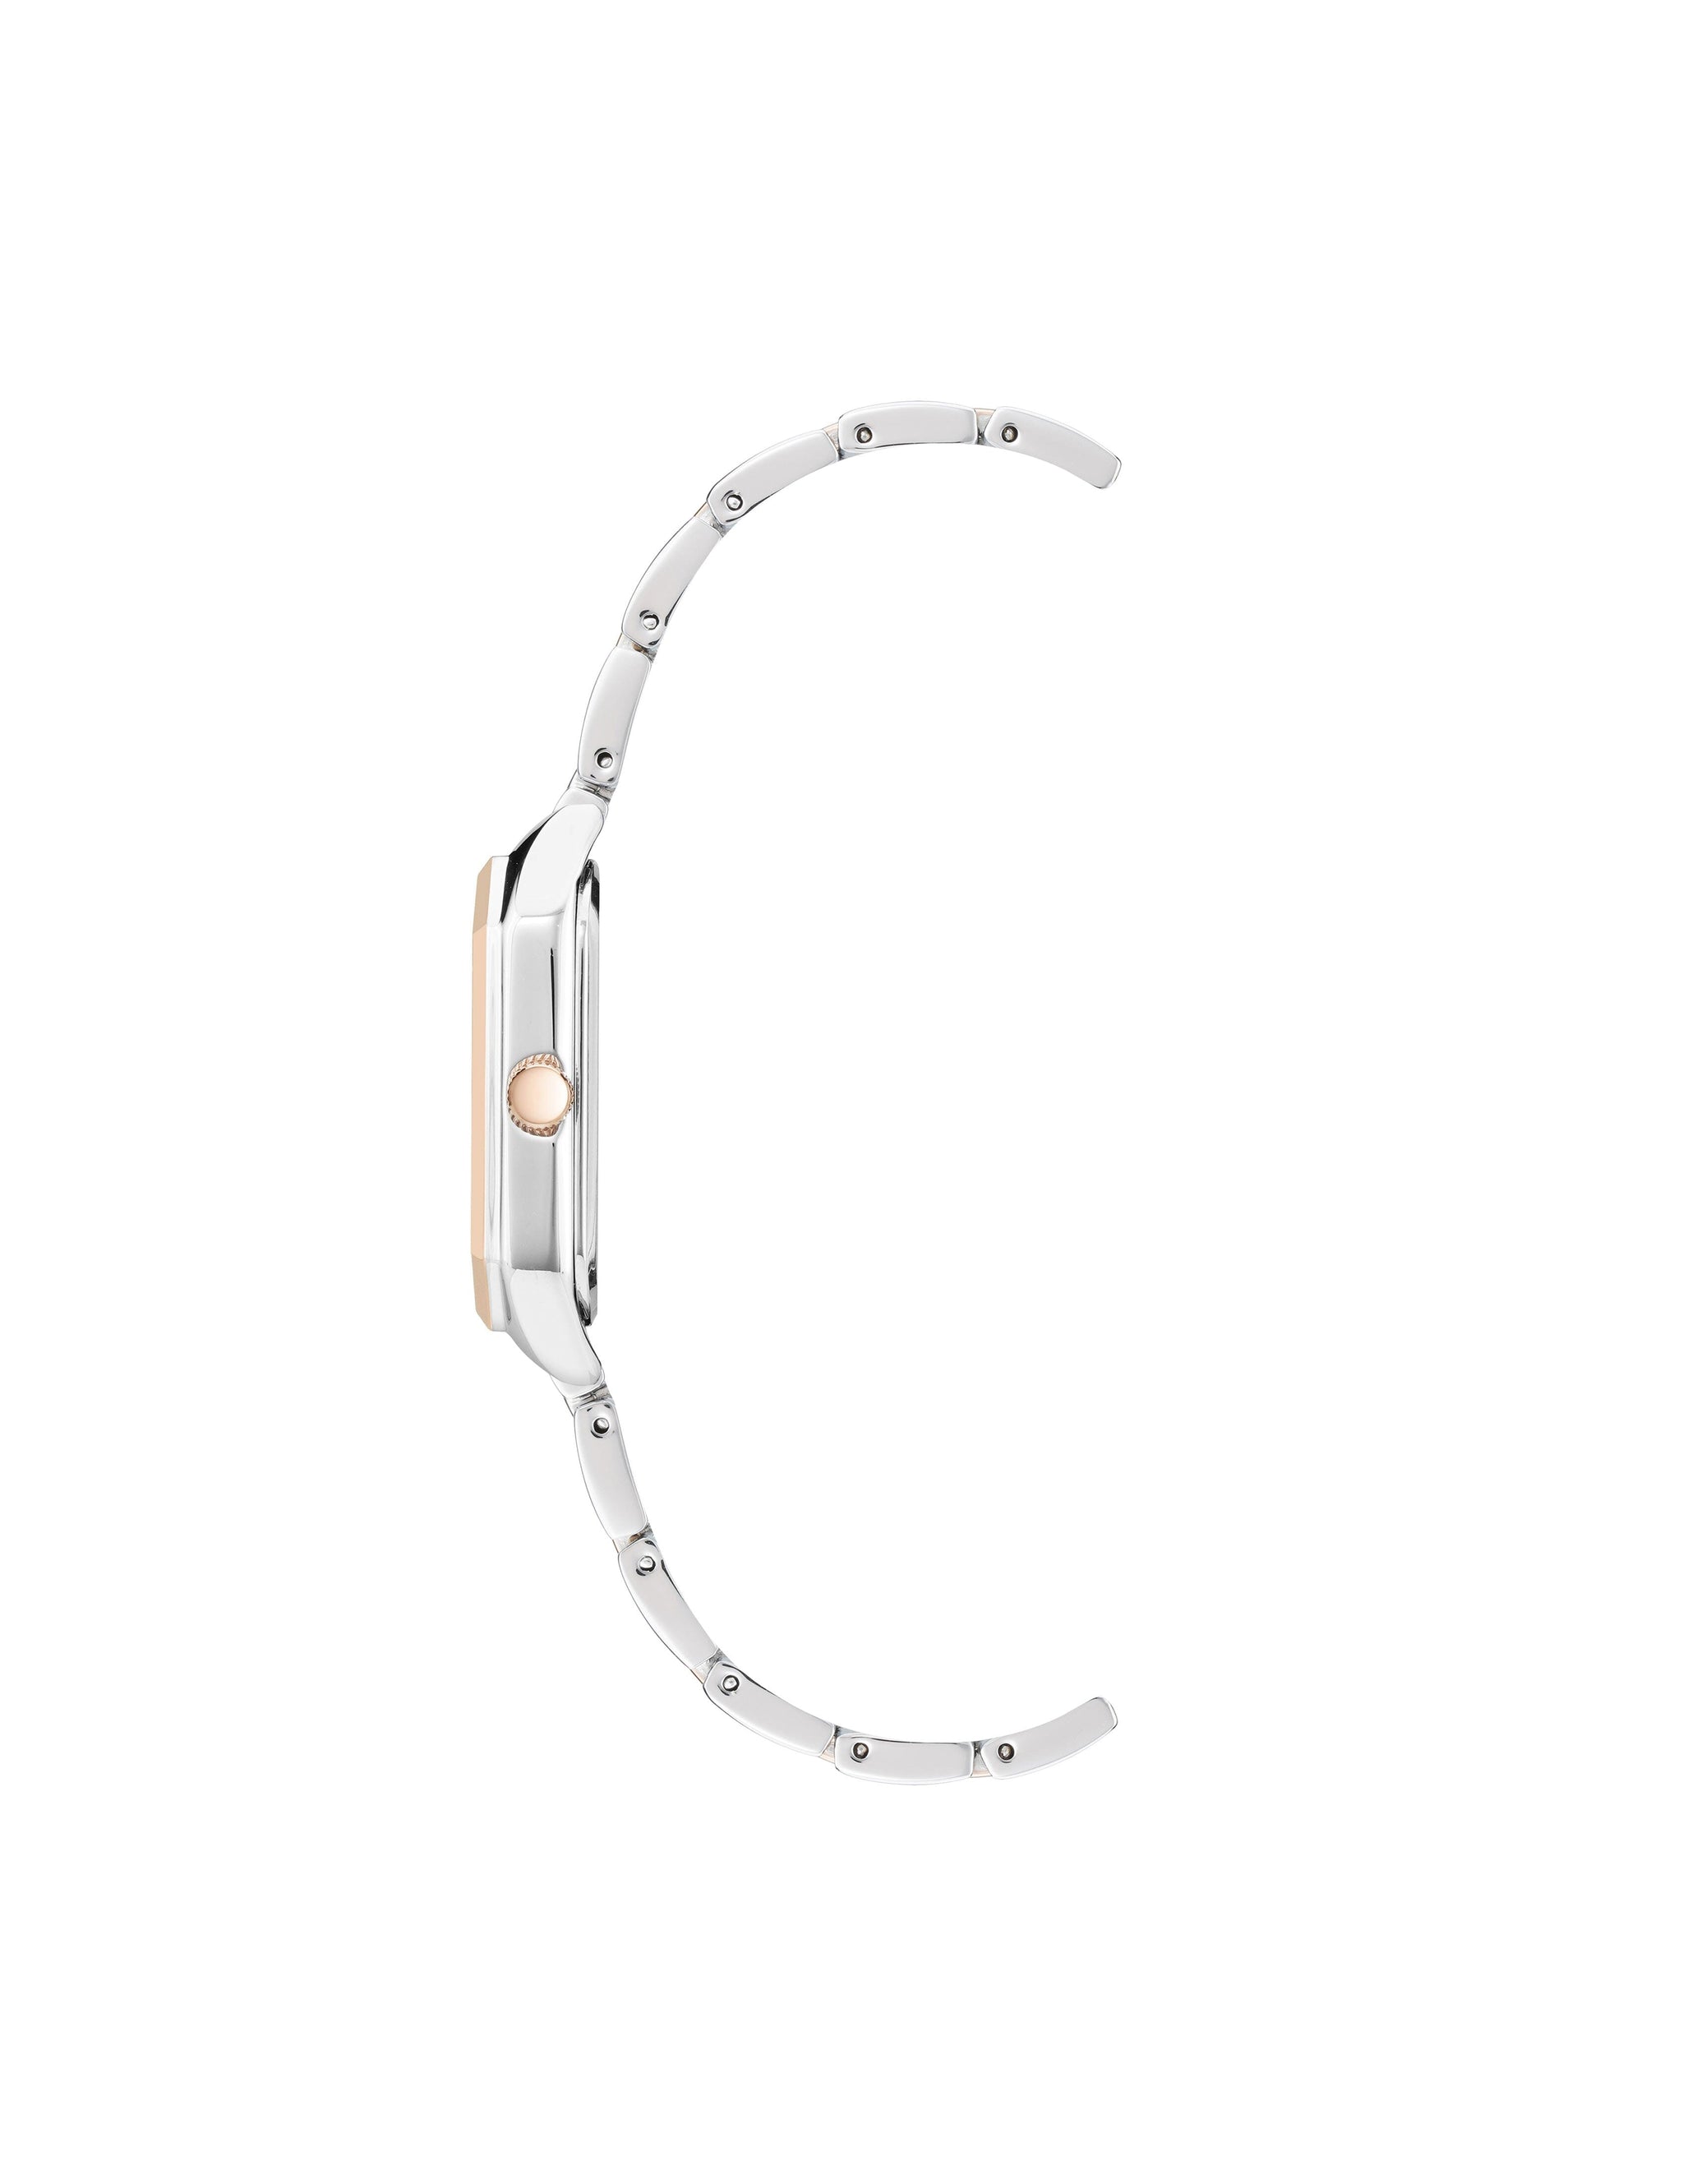 Octagonal Shaped Metal Bracelet Watch Rose Gold | Anne Klein